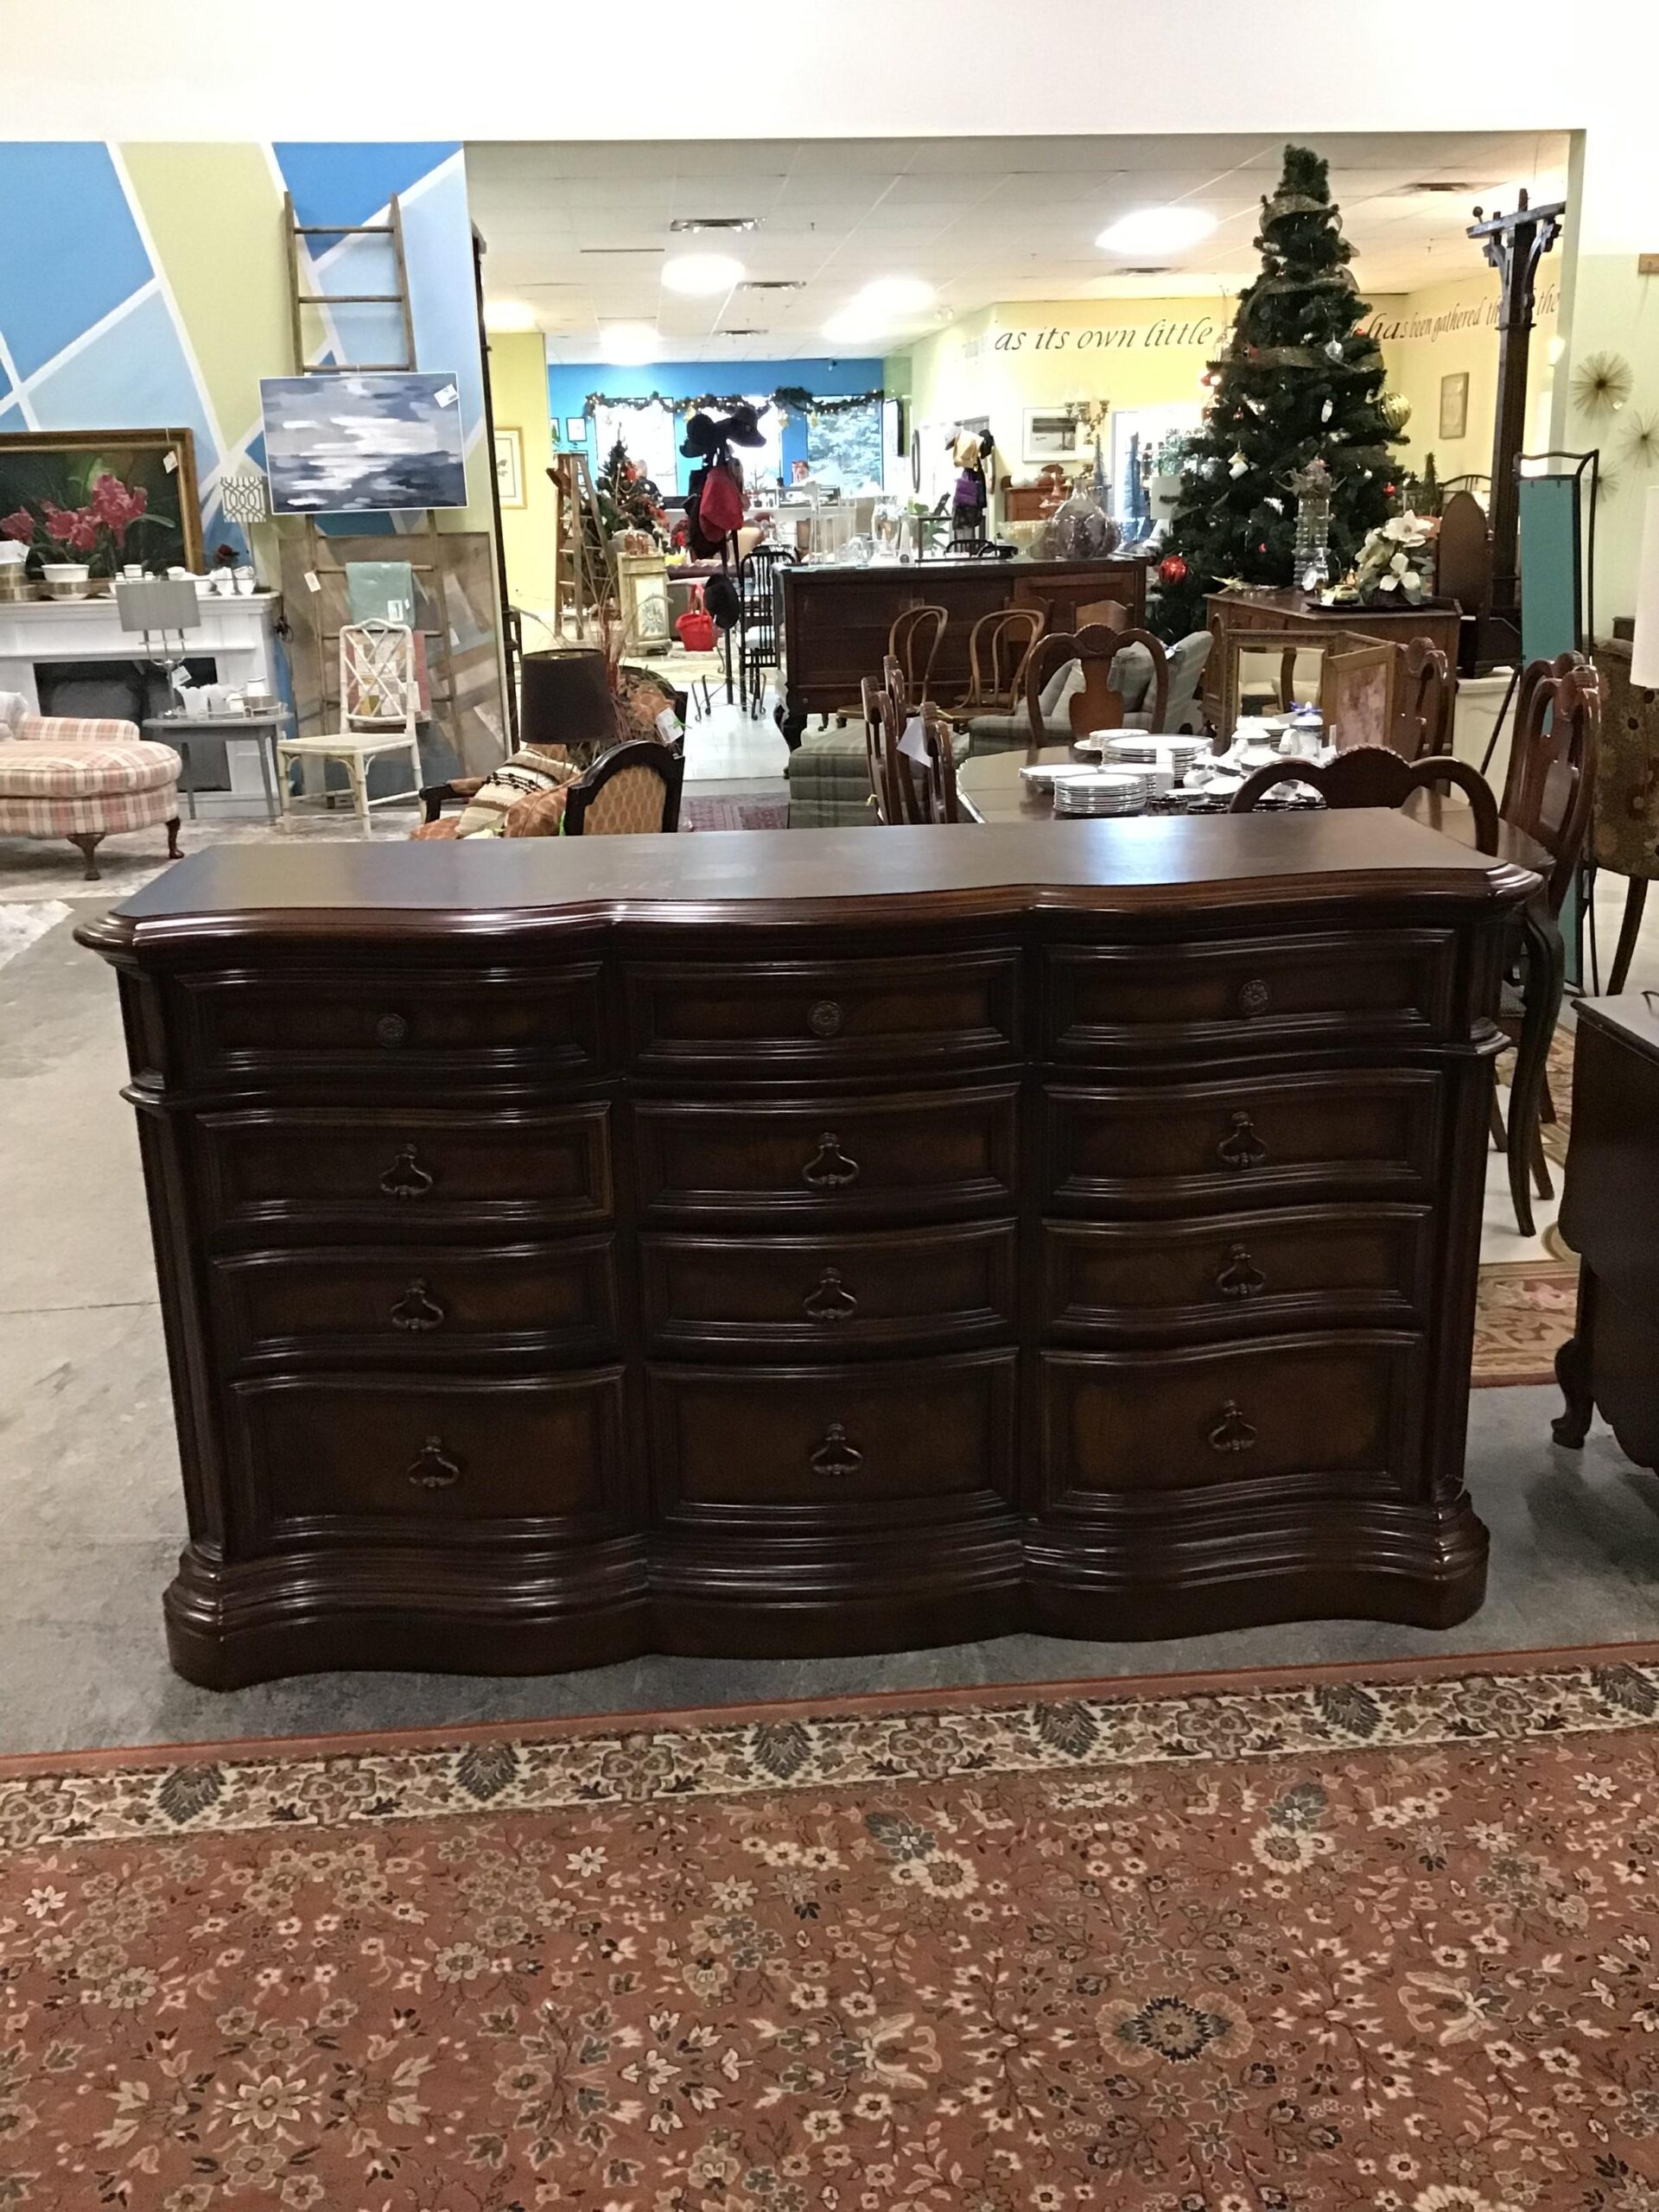 Ashley Furniture Signature Antique Brown Dresser – Say Good BUY $294.24